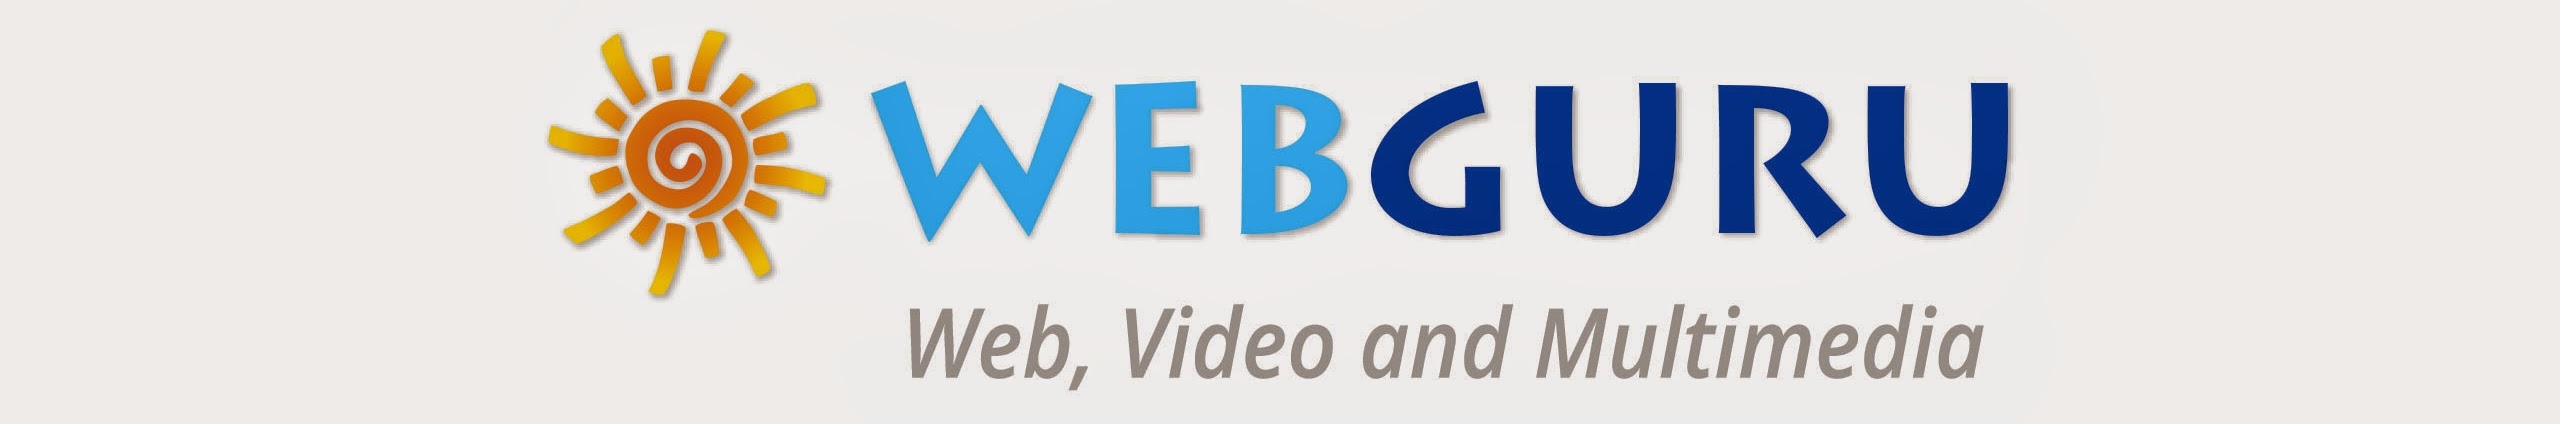 Web Guru - Video and Web Training Classes's Logo